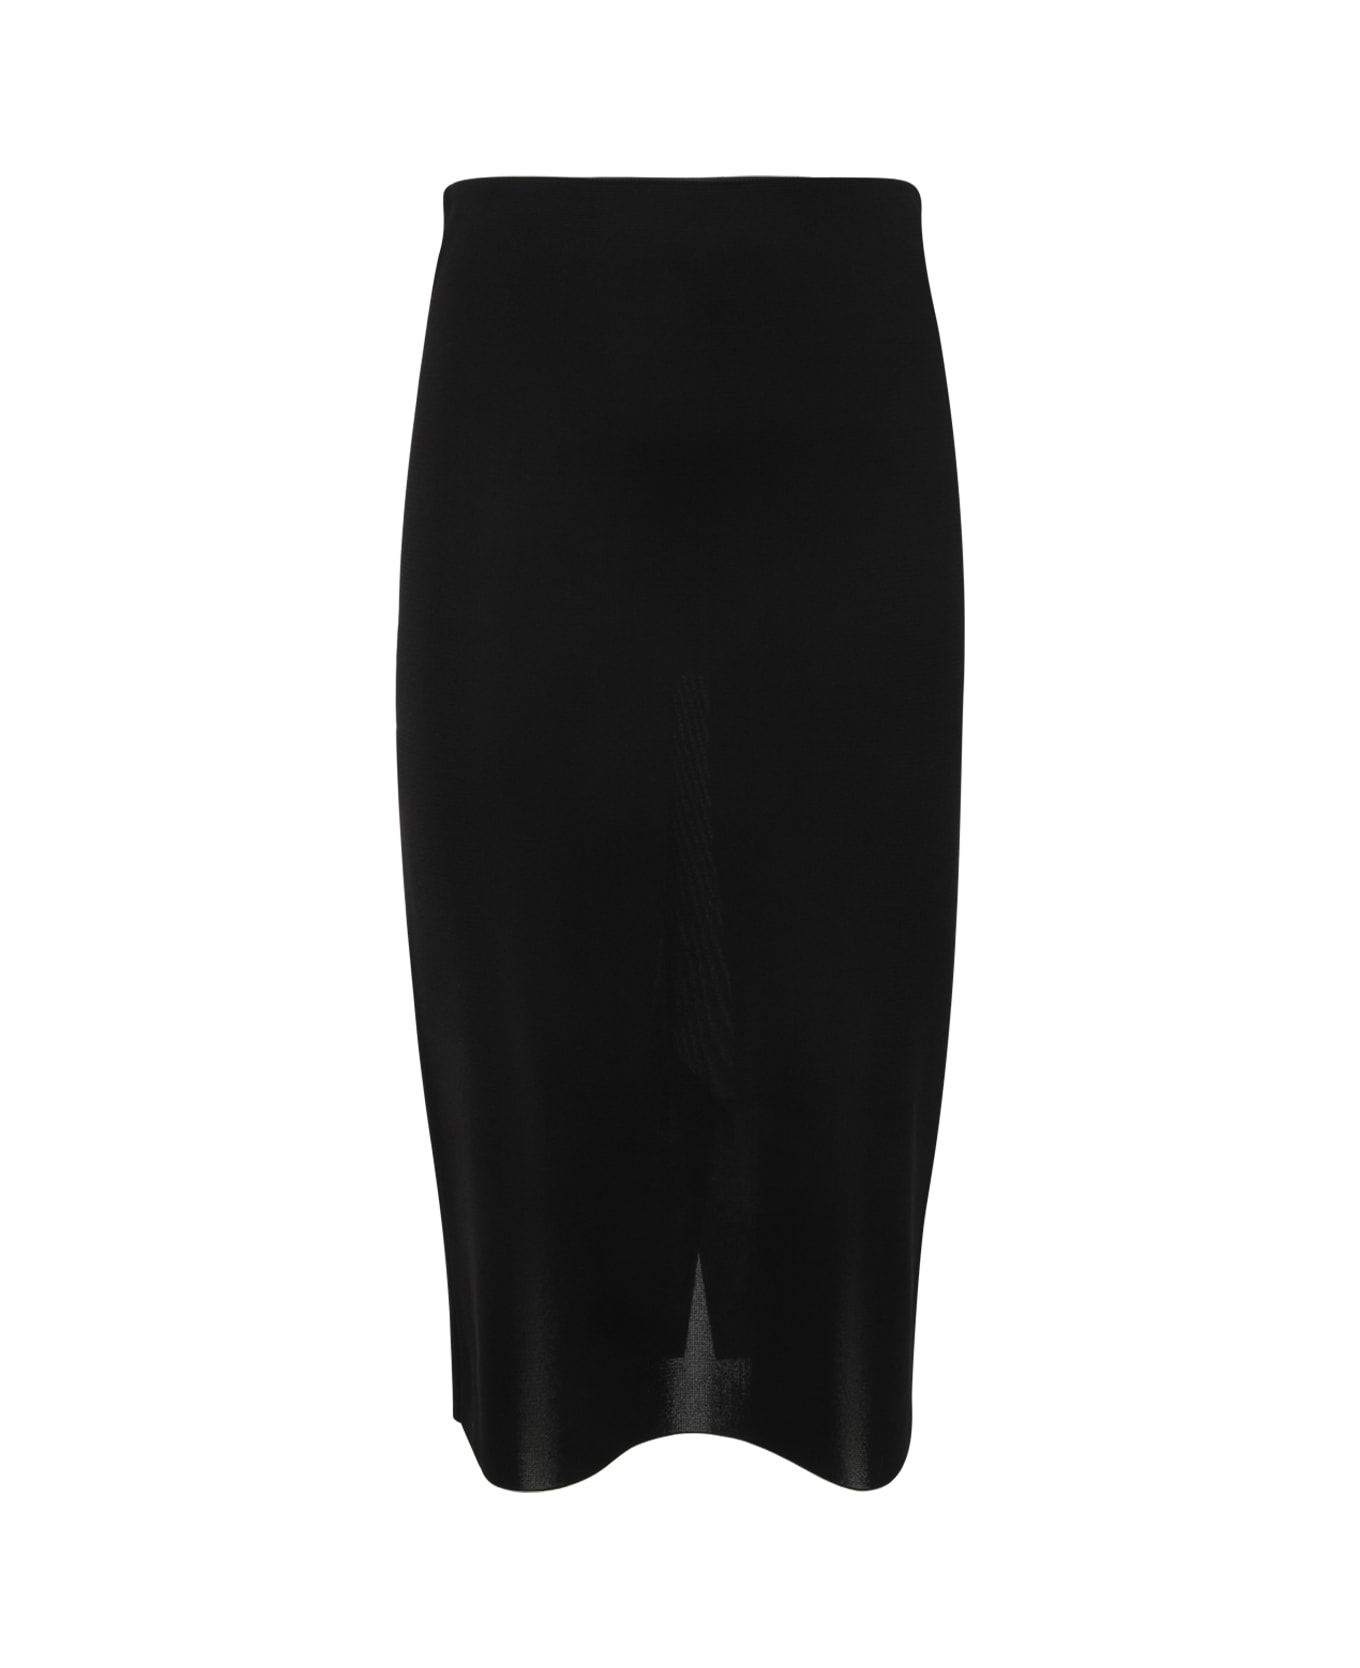 Tom Ford Knitwear Skirt - Black スカート